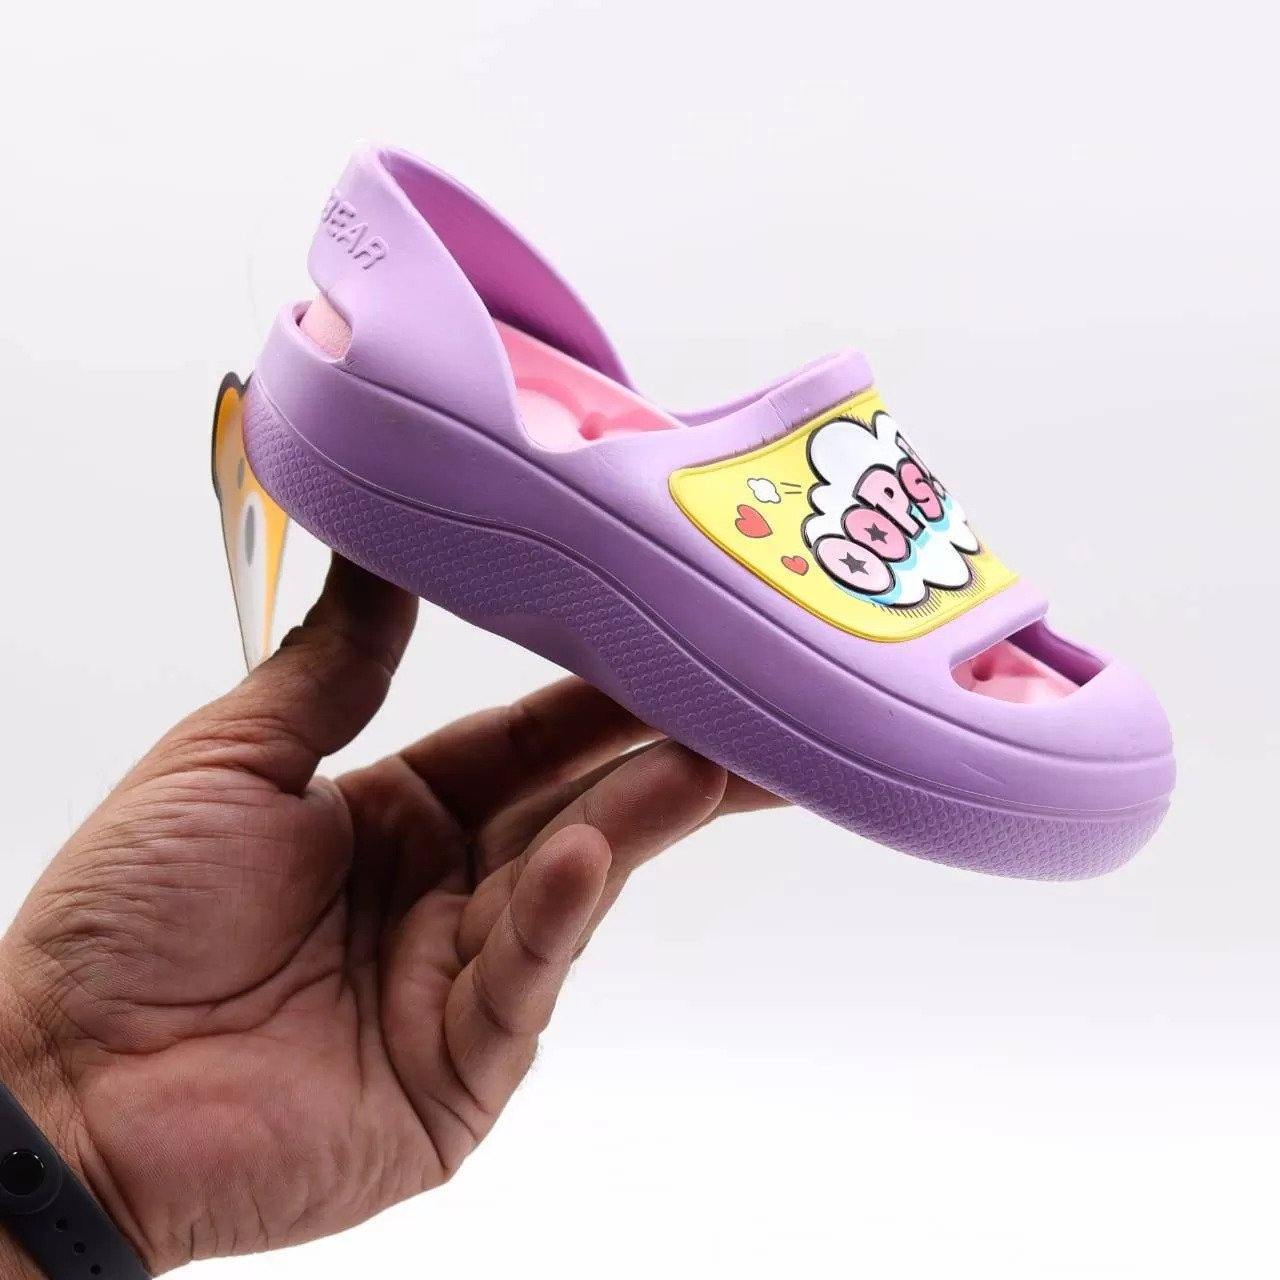 Boogie Bear Kids Shoes 613 - Jango Mall